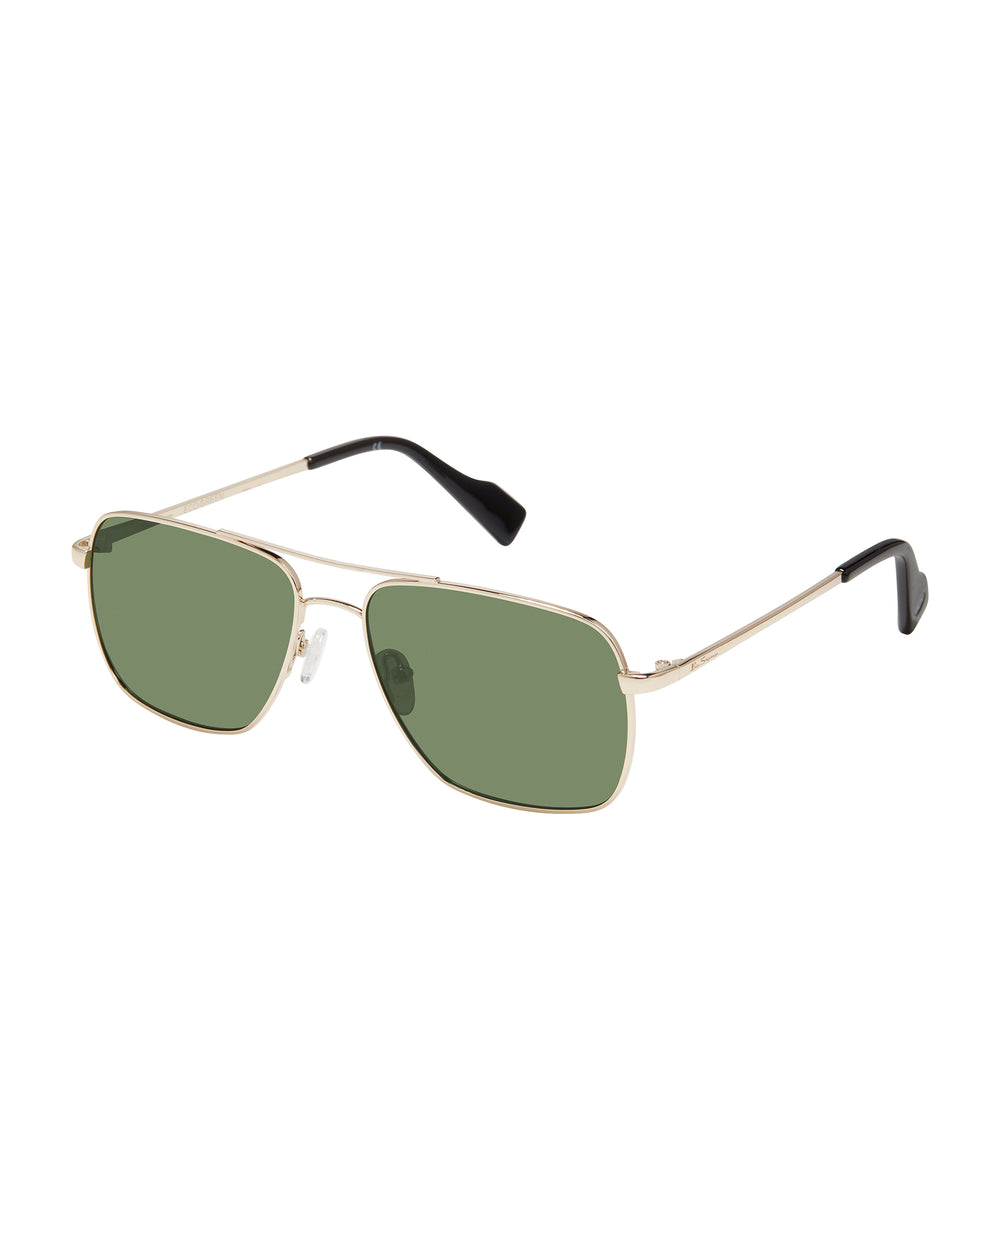 Stephen Eco-Green Sunglasses - Gold/G15